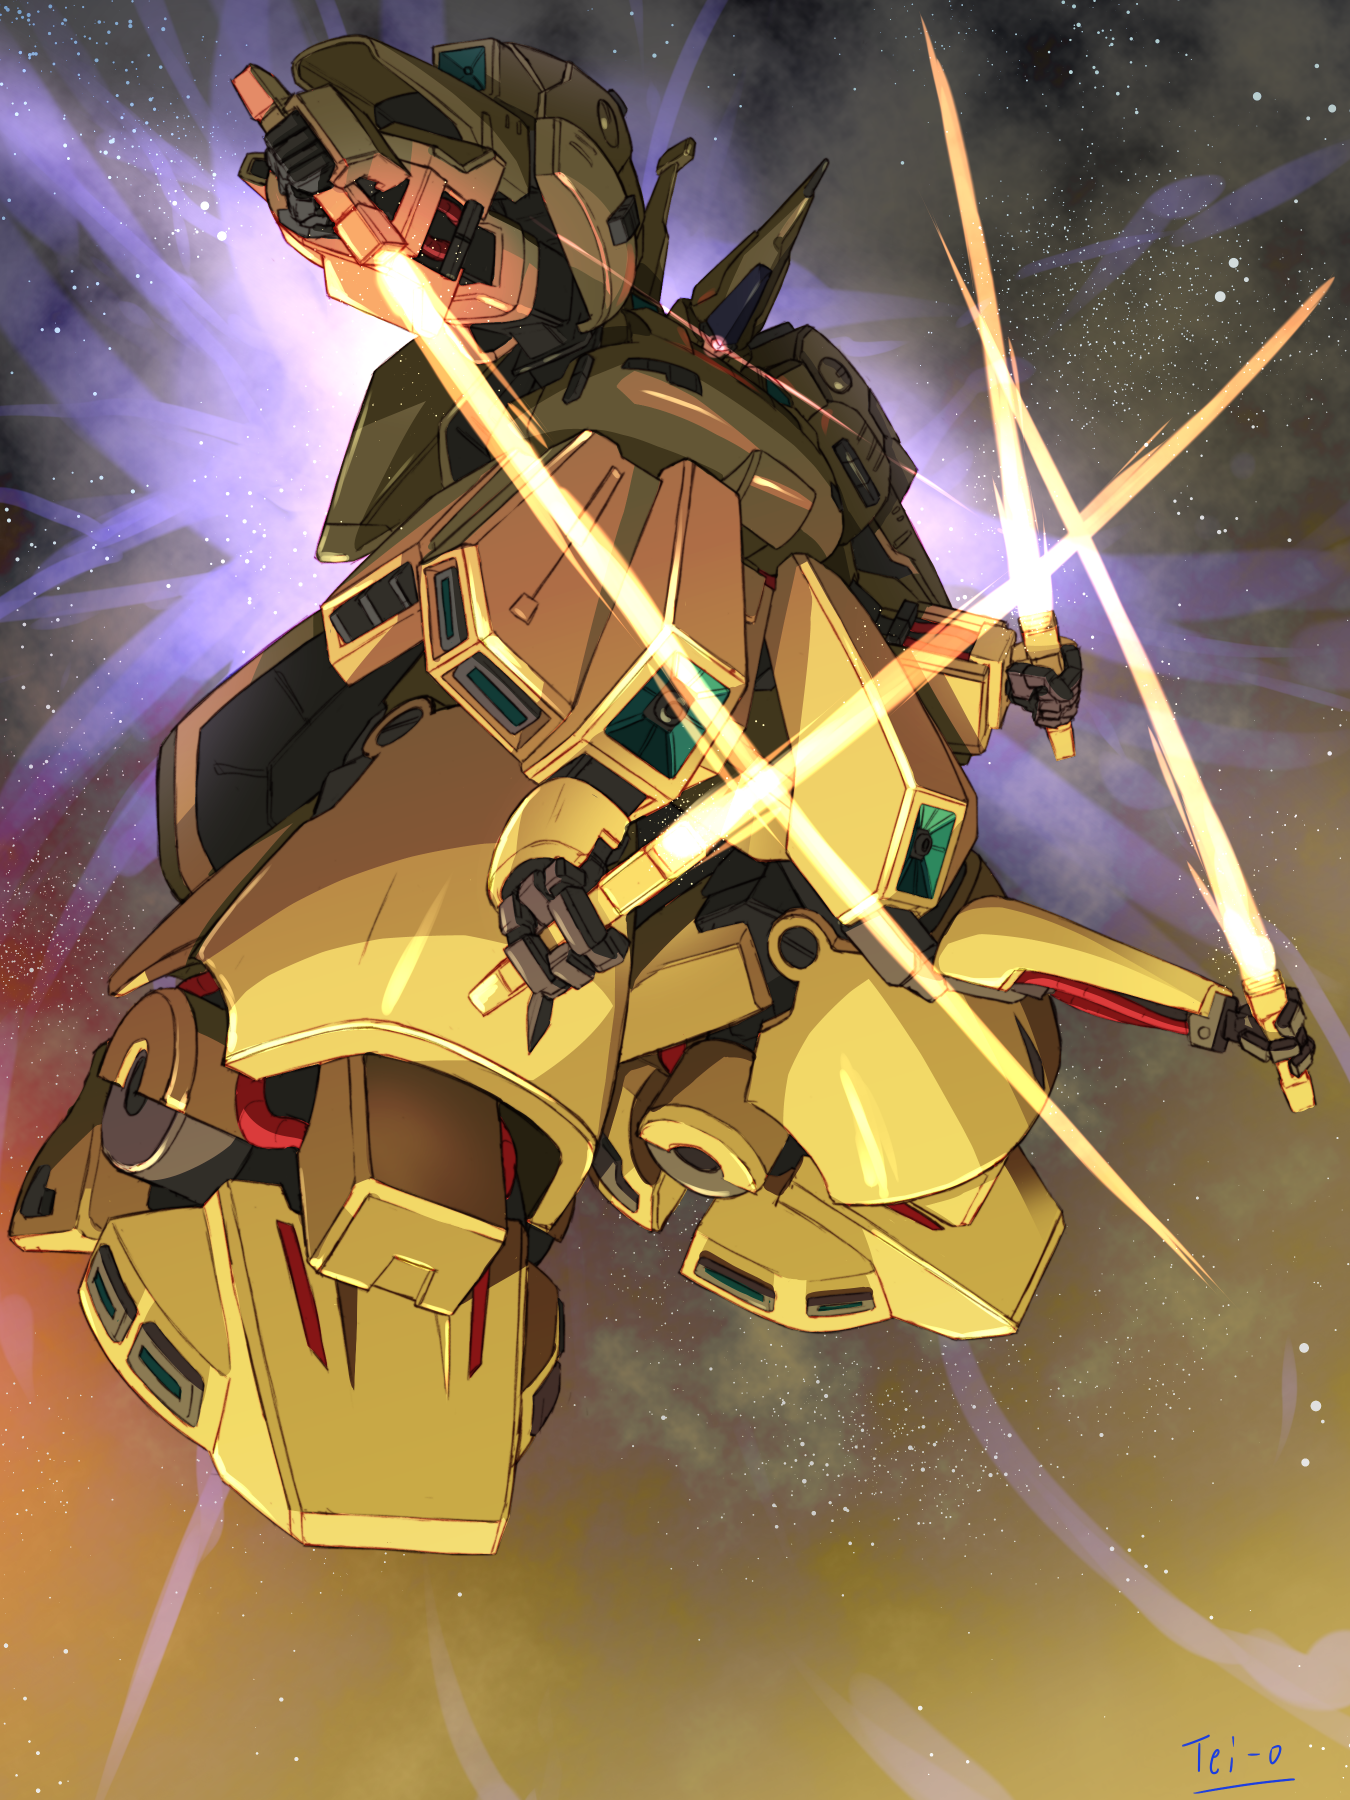 The O Mobile Suit Zeta Gundam Mobile Suit Anime Mechs Super Robot Taisen Artwork Digital Art Fan Art 1350x1800